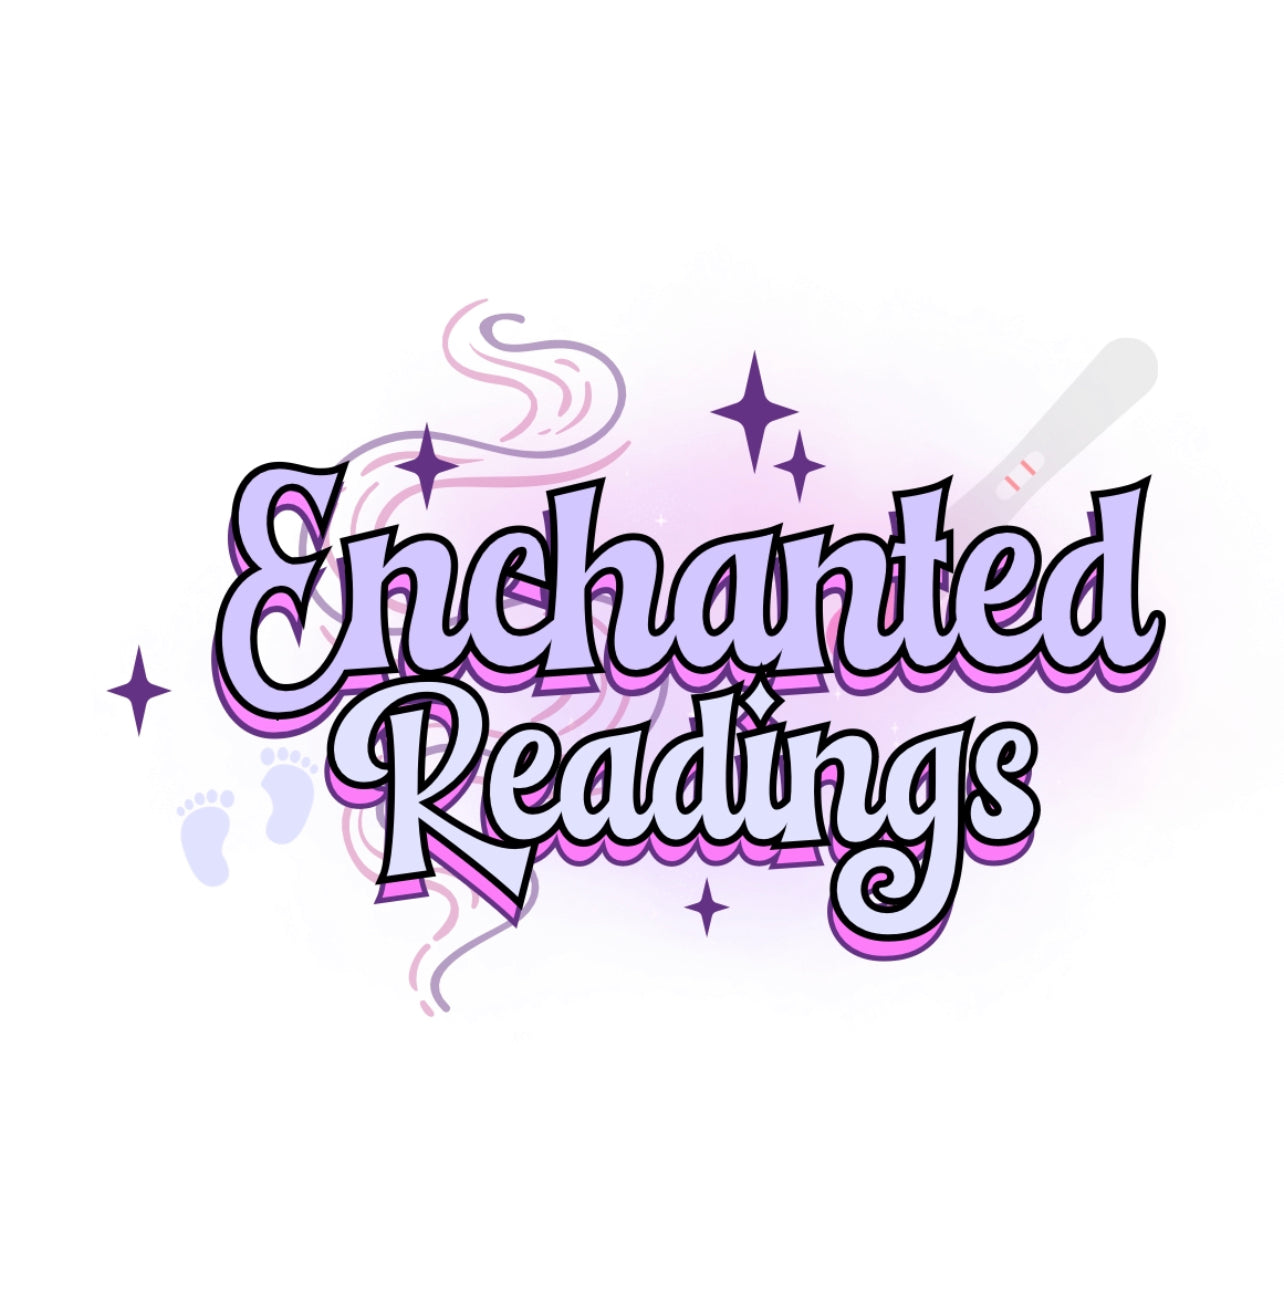 Enchanted Readings 